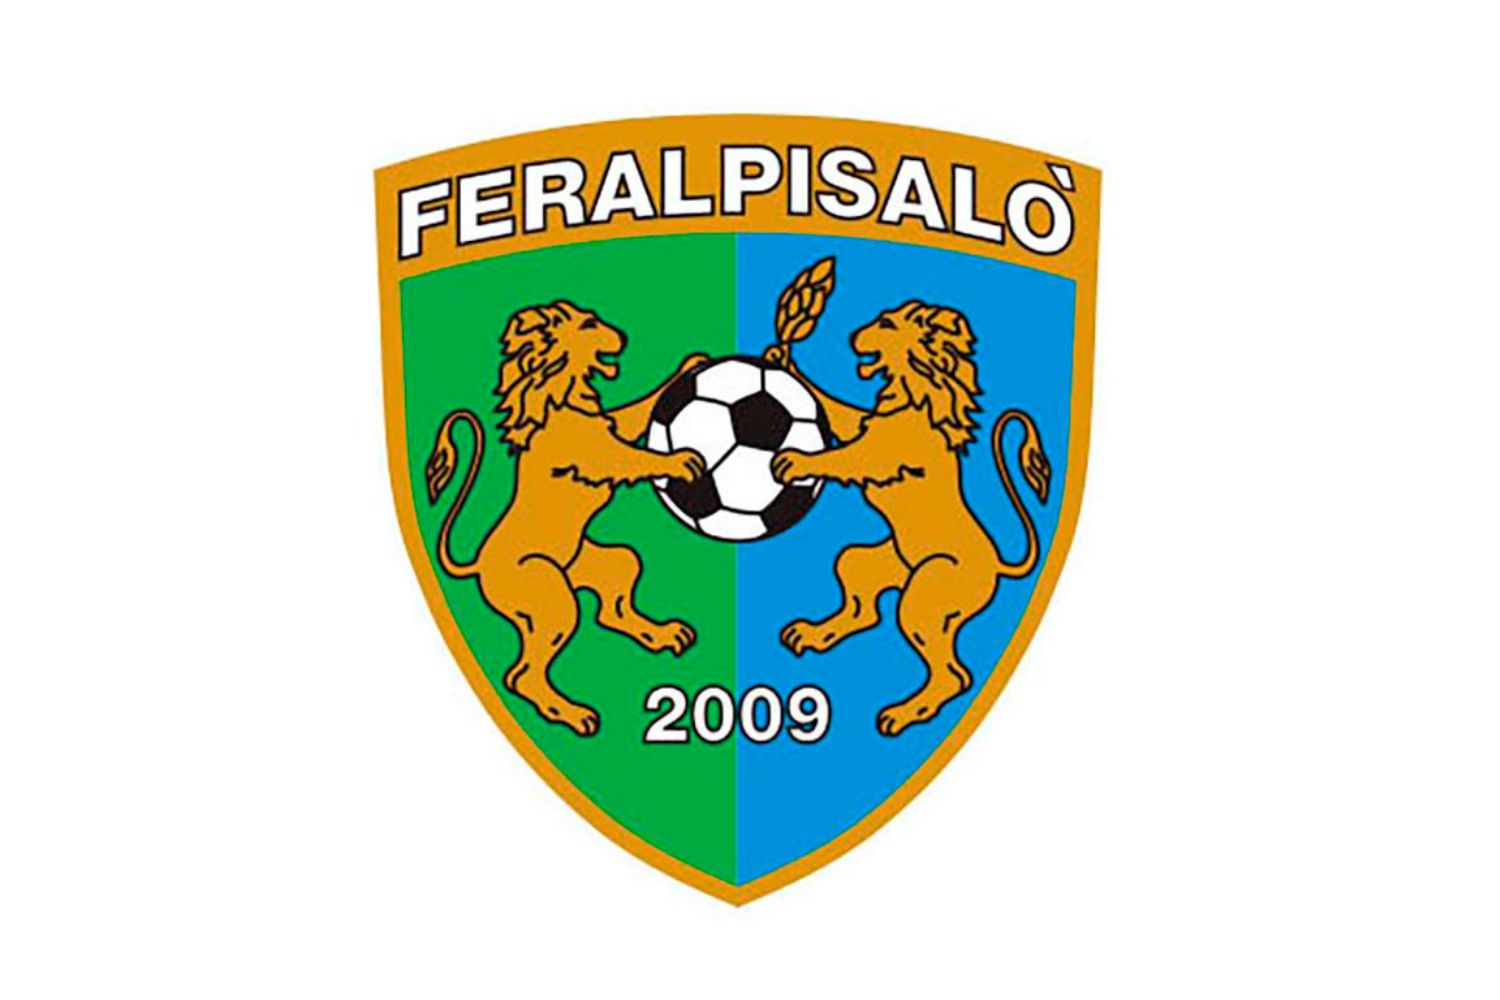 feralpisalo-24-football-club-facts